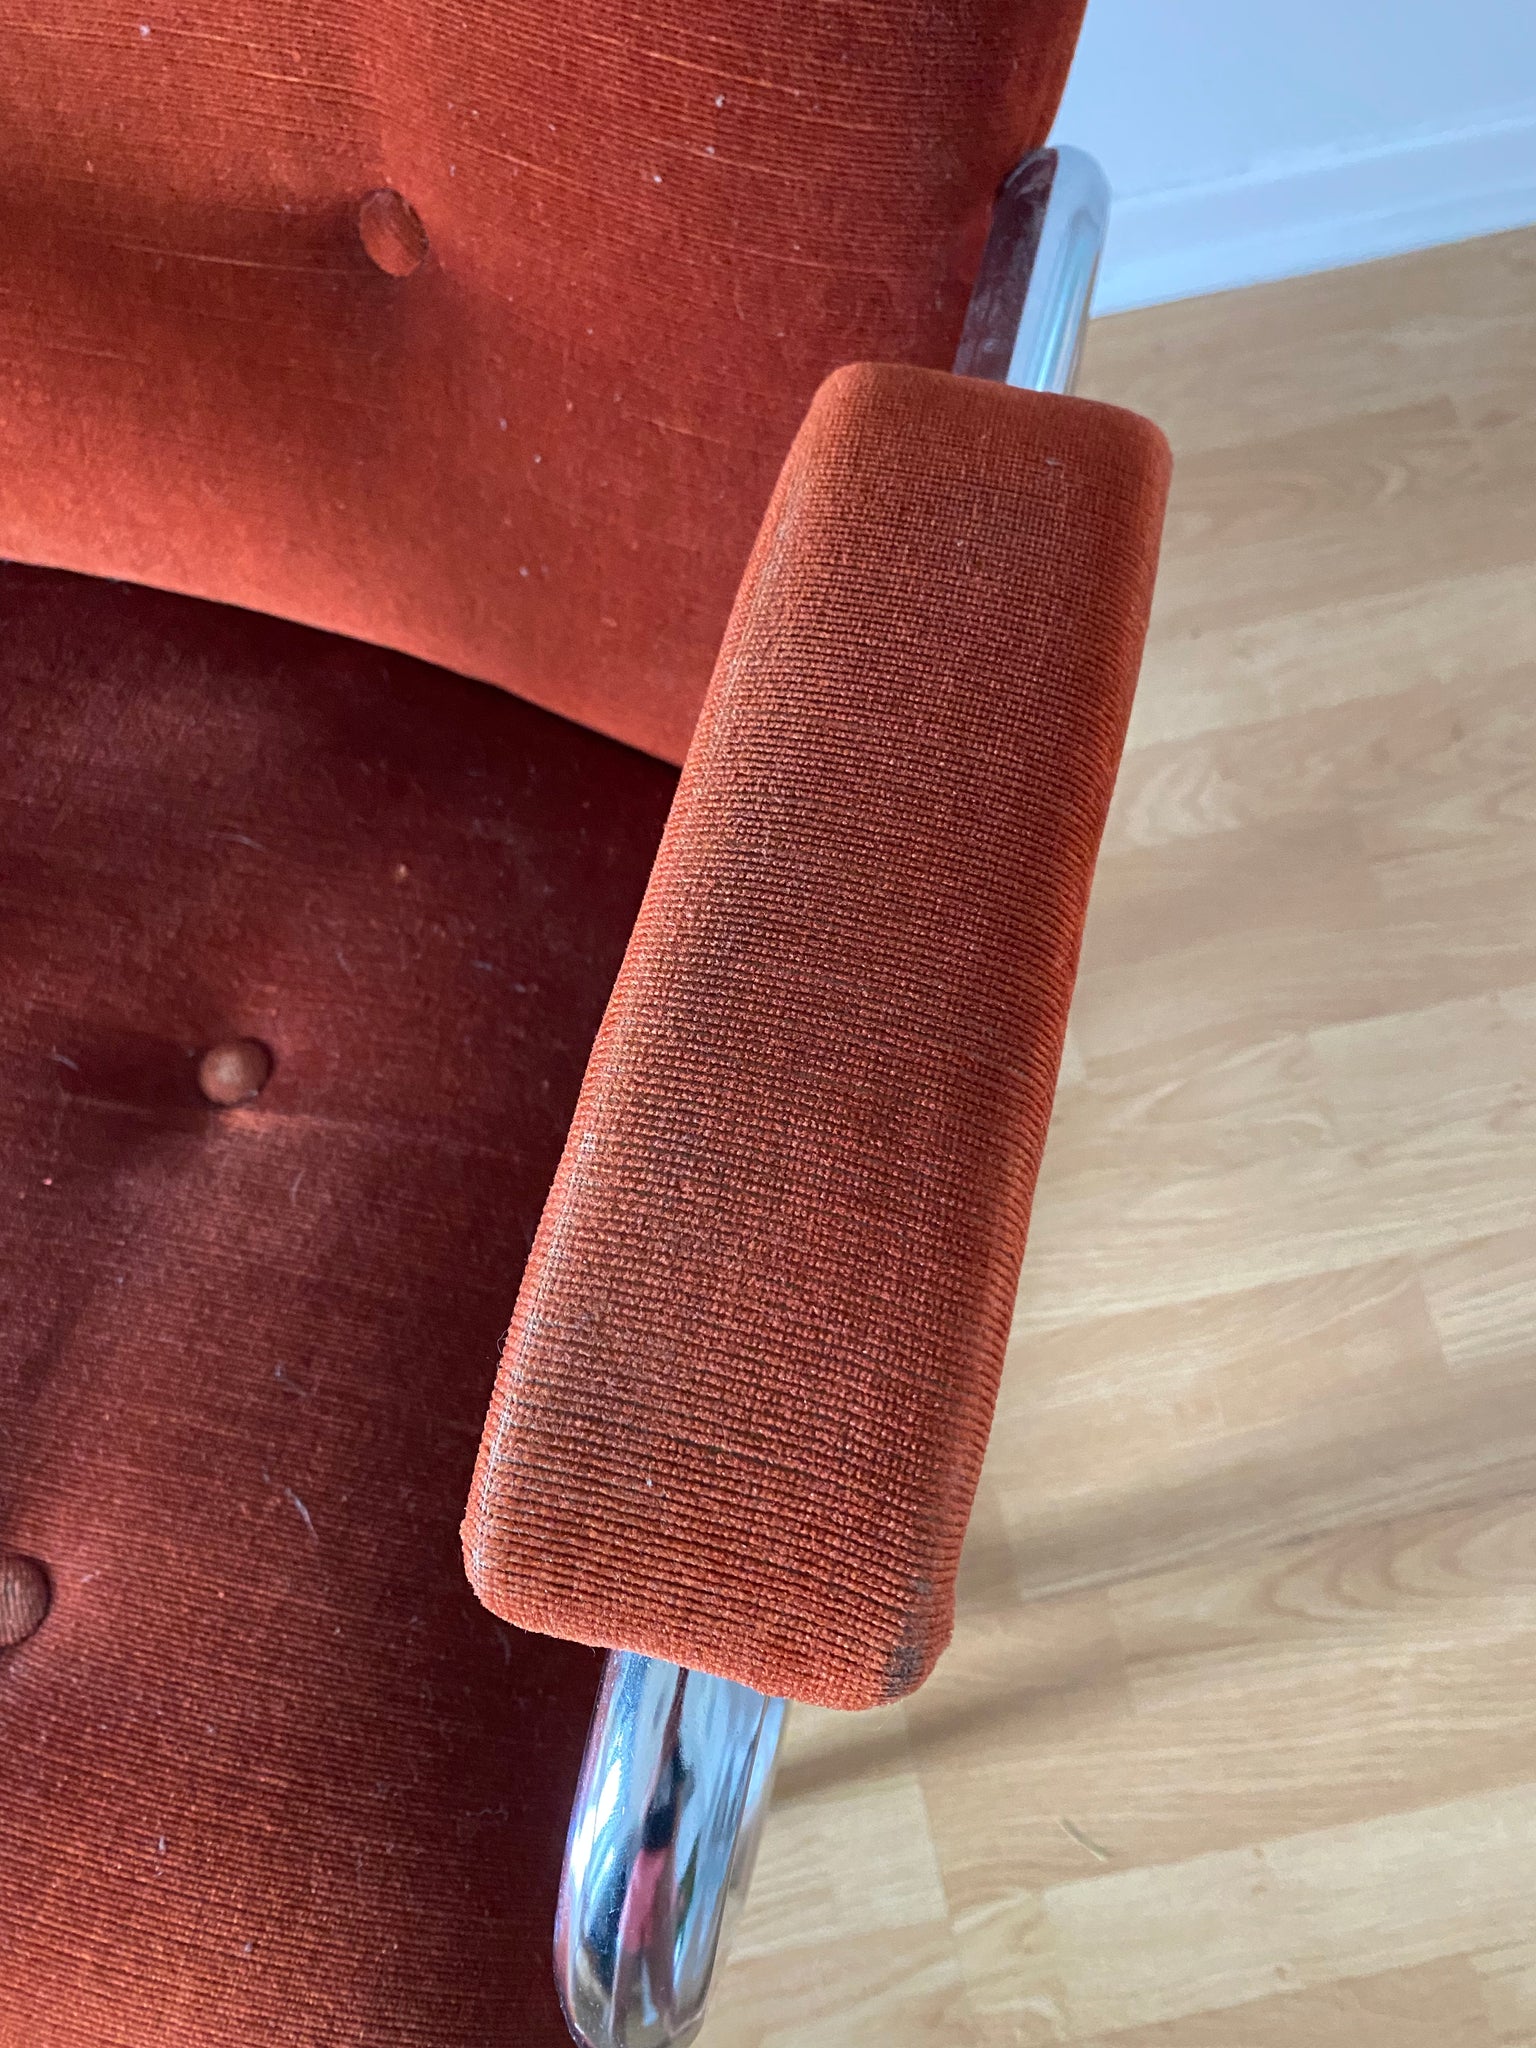 Burnt orange velour & chrome rocking chair